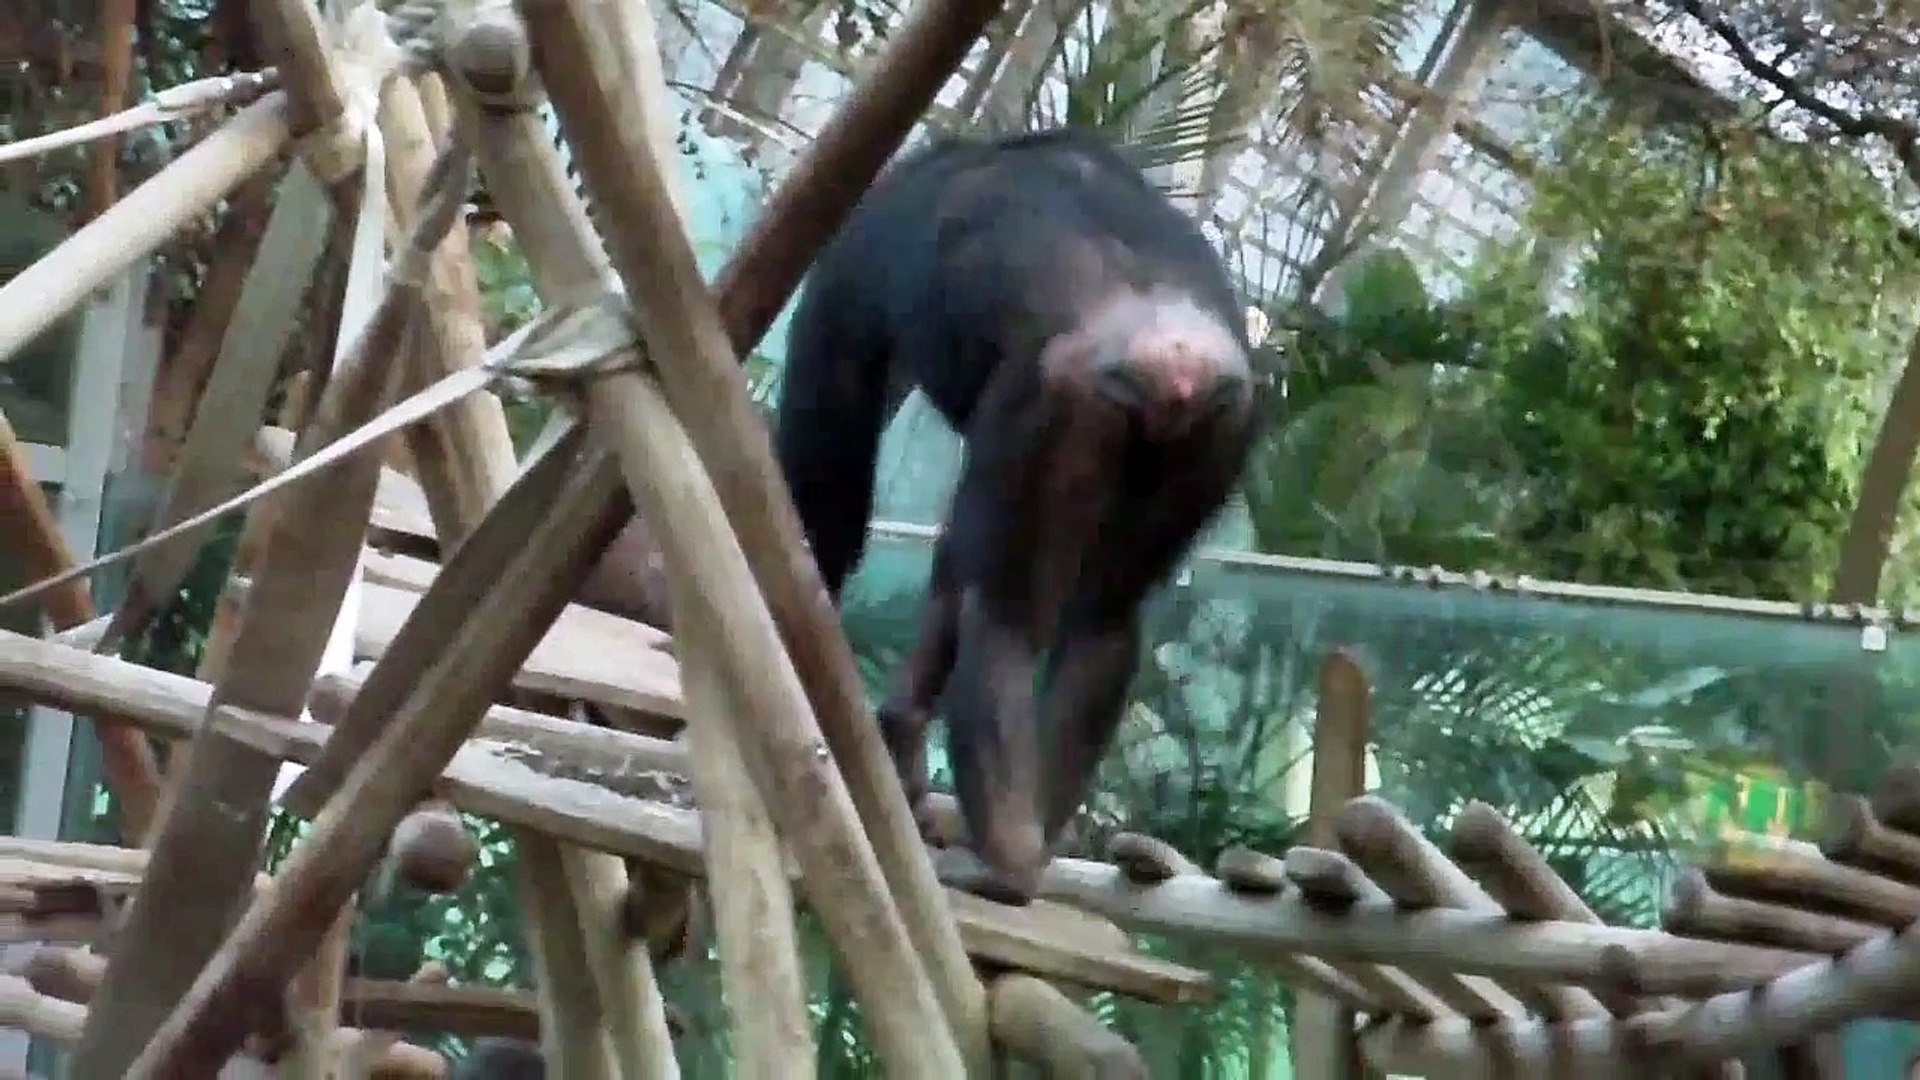 The Munich Zoo's chimpanzees - Gorillas - Diana Monkeys